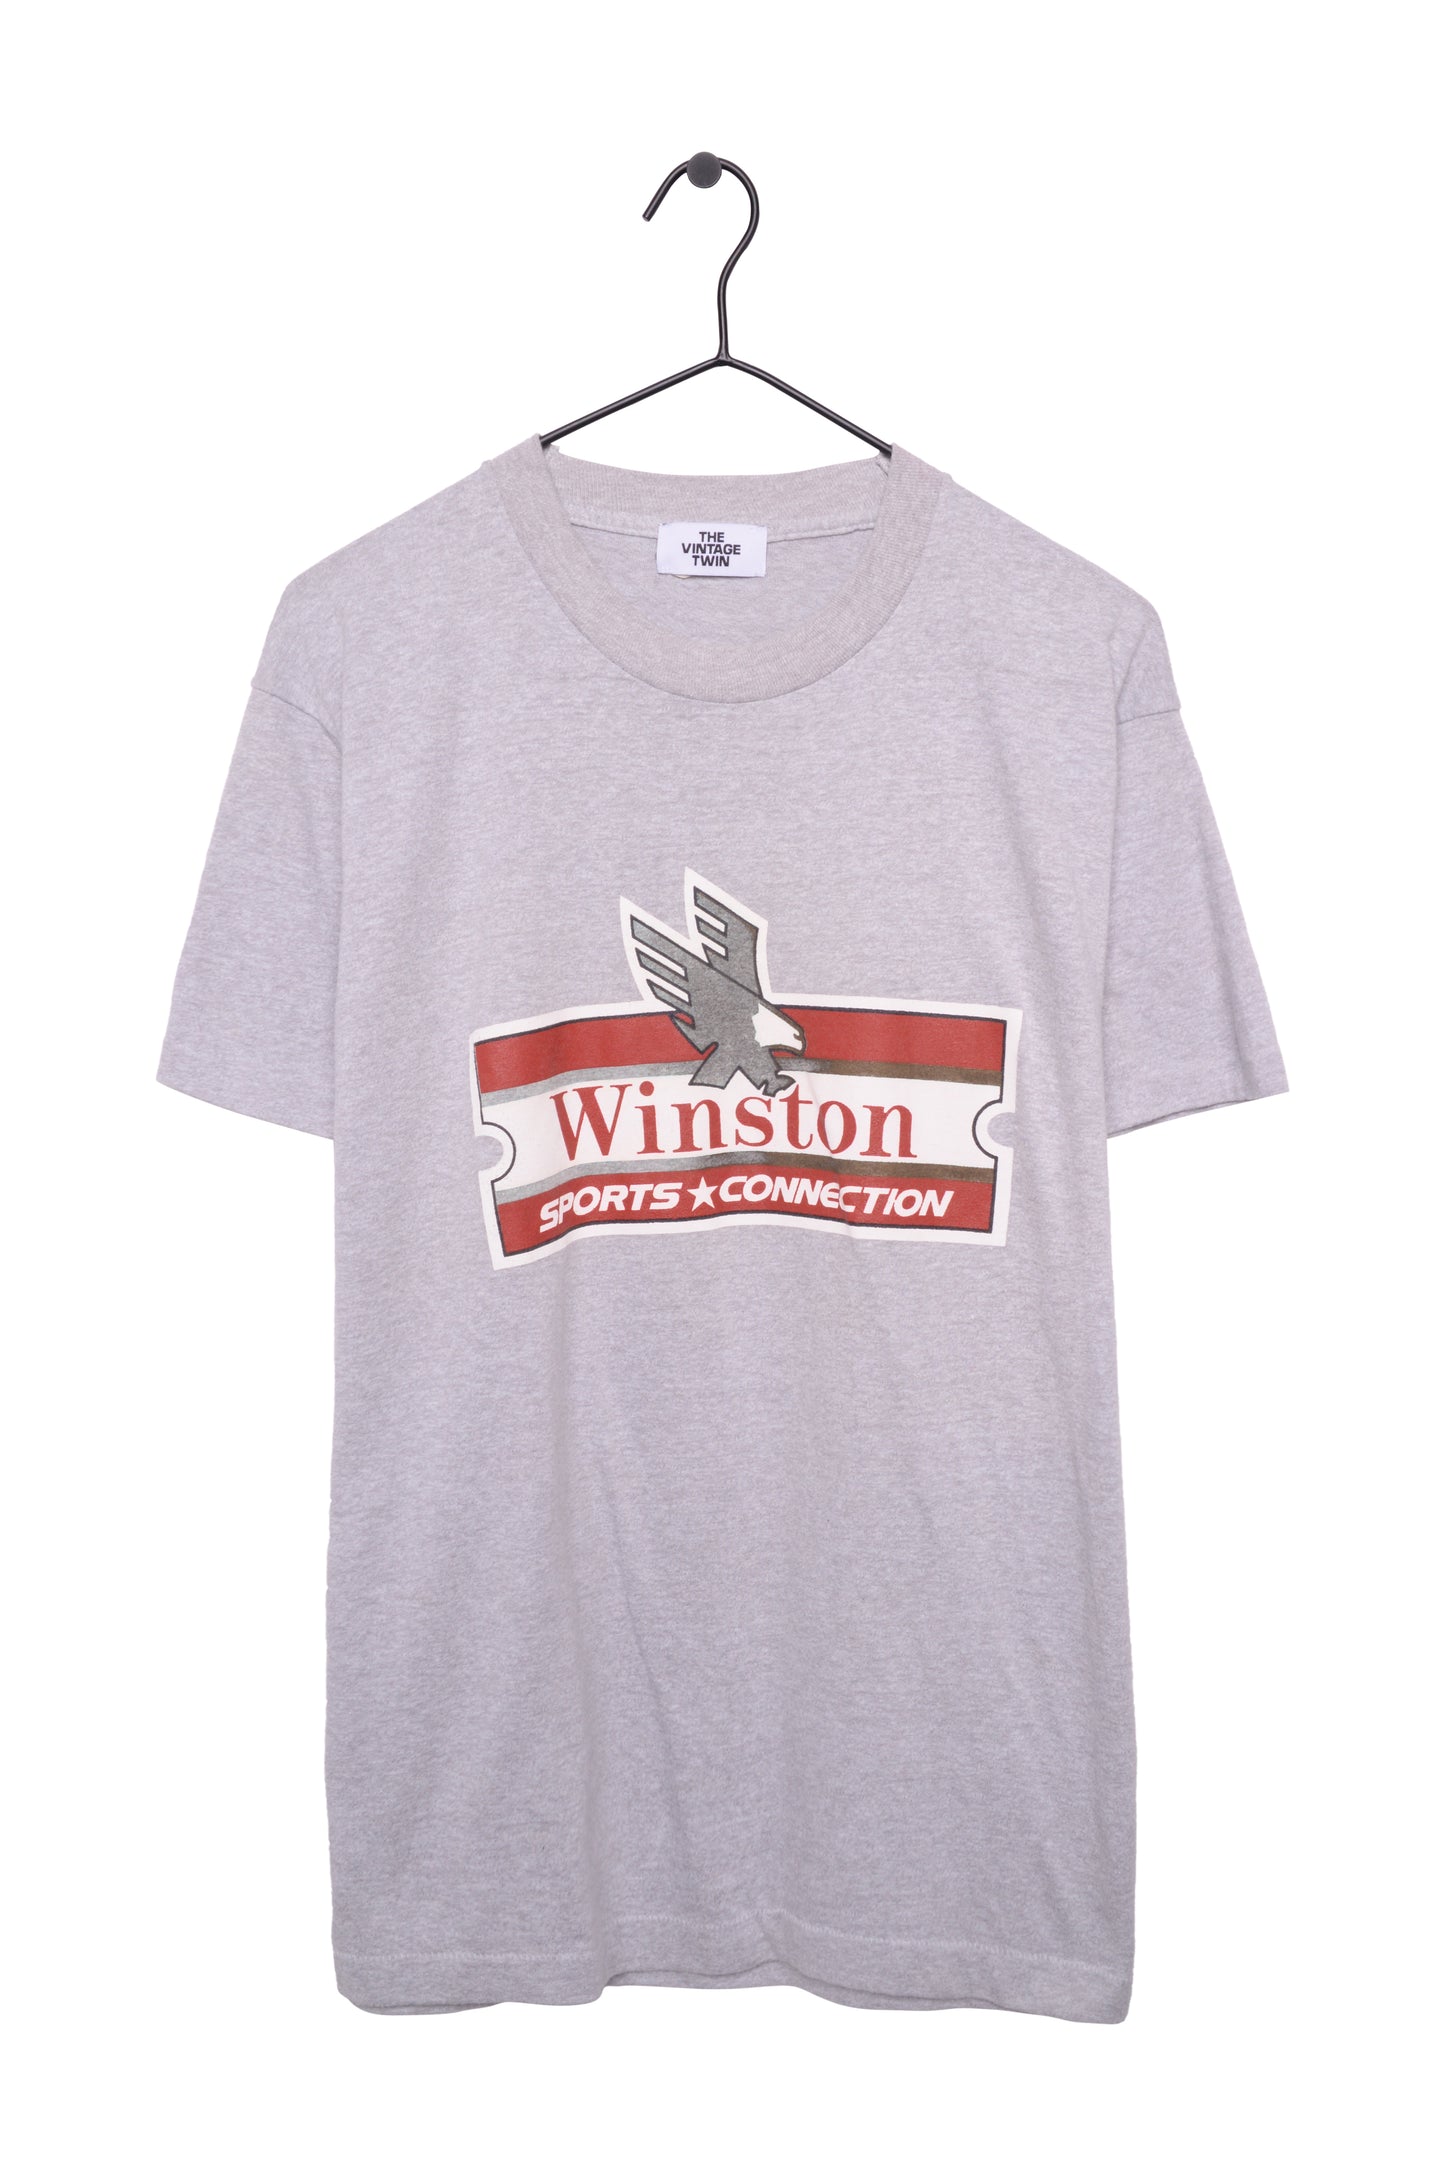 Winston Sports Connection Tee USA